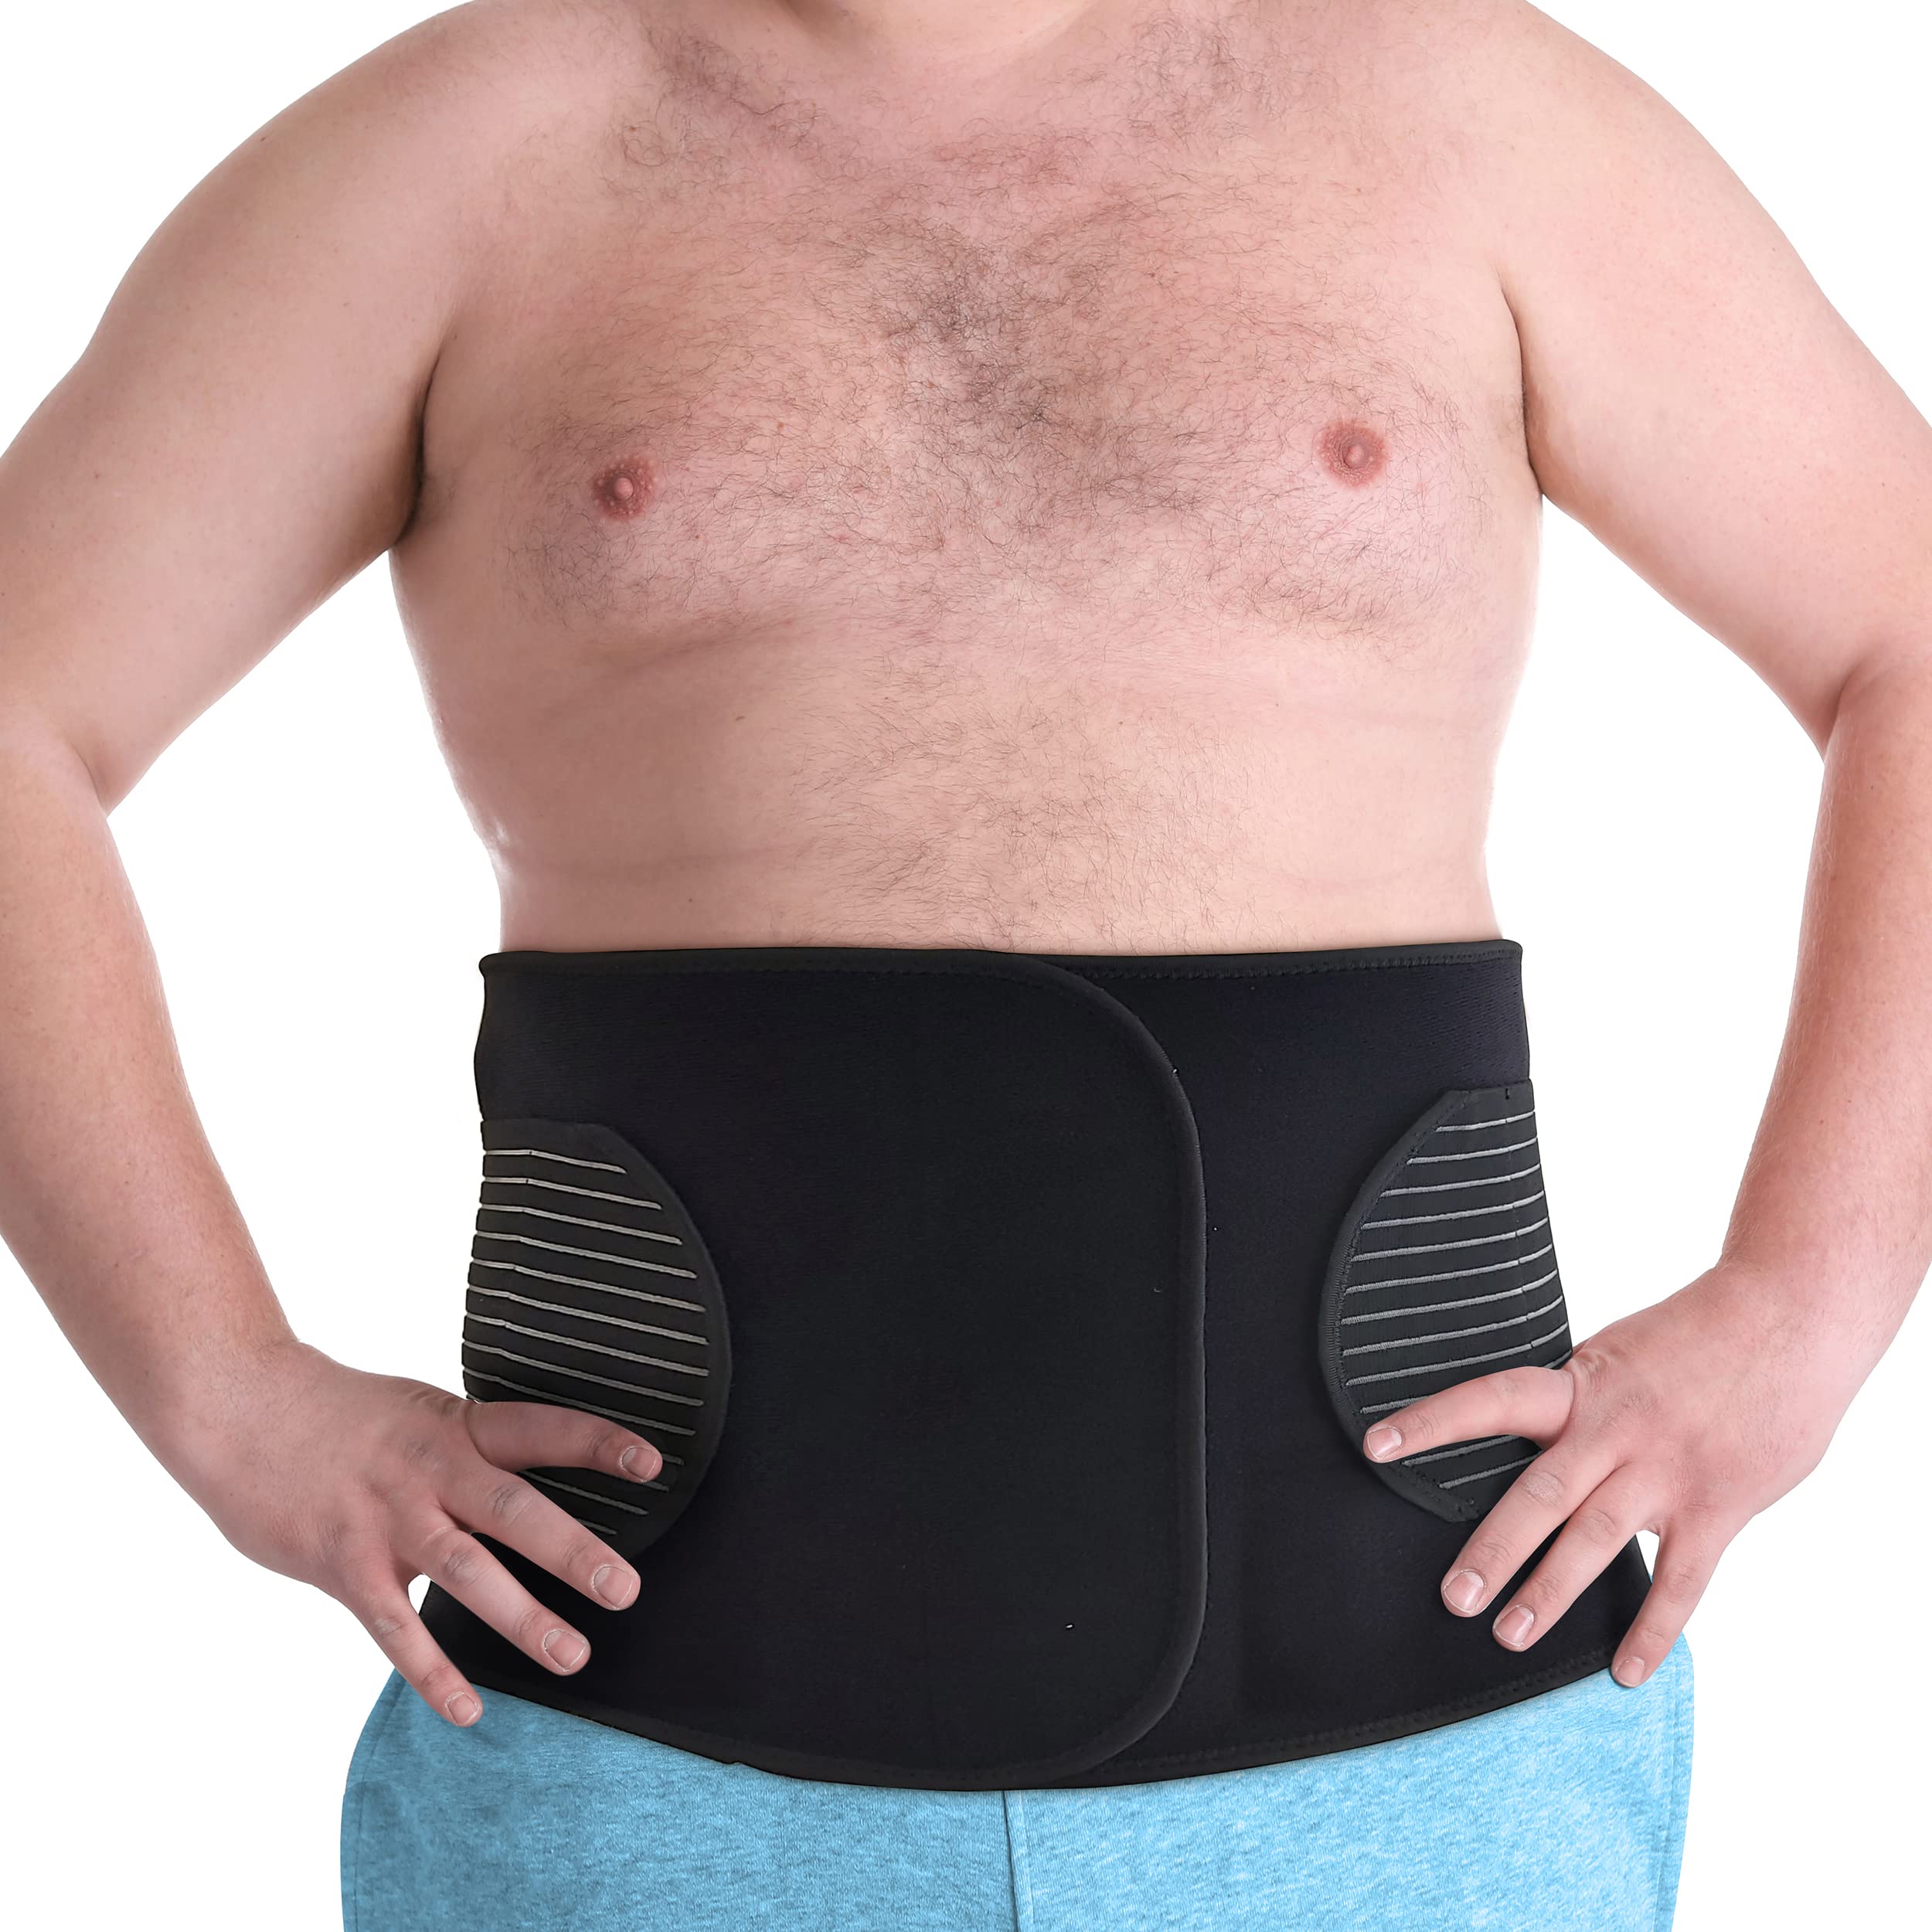 Fajas Abdominal Binder Hernia Support Back Stomach Compression